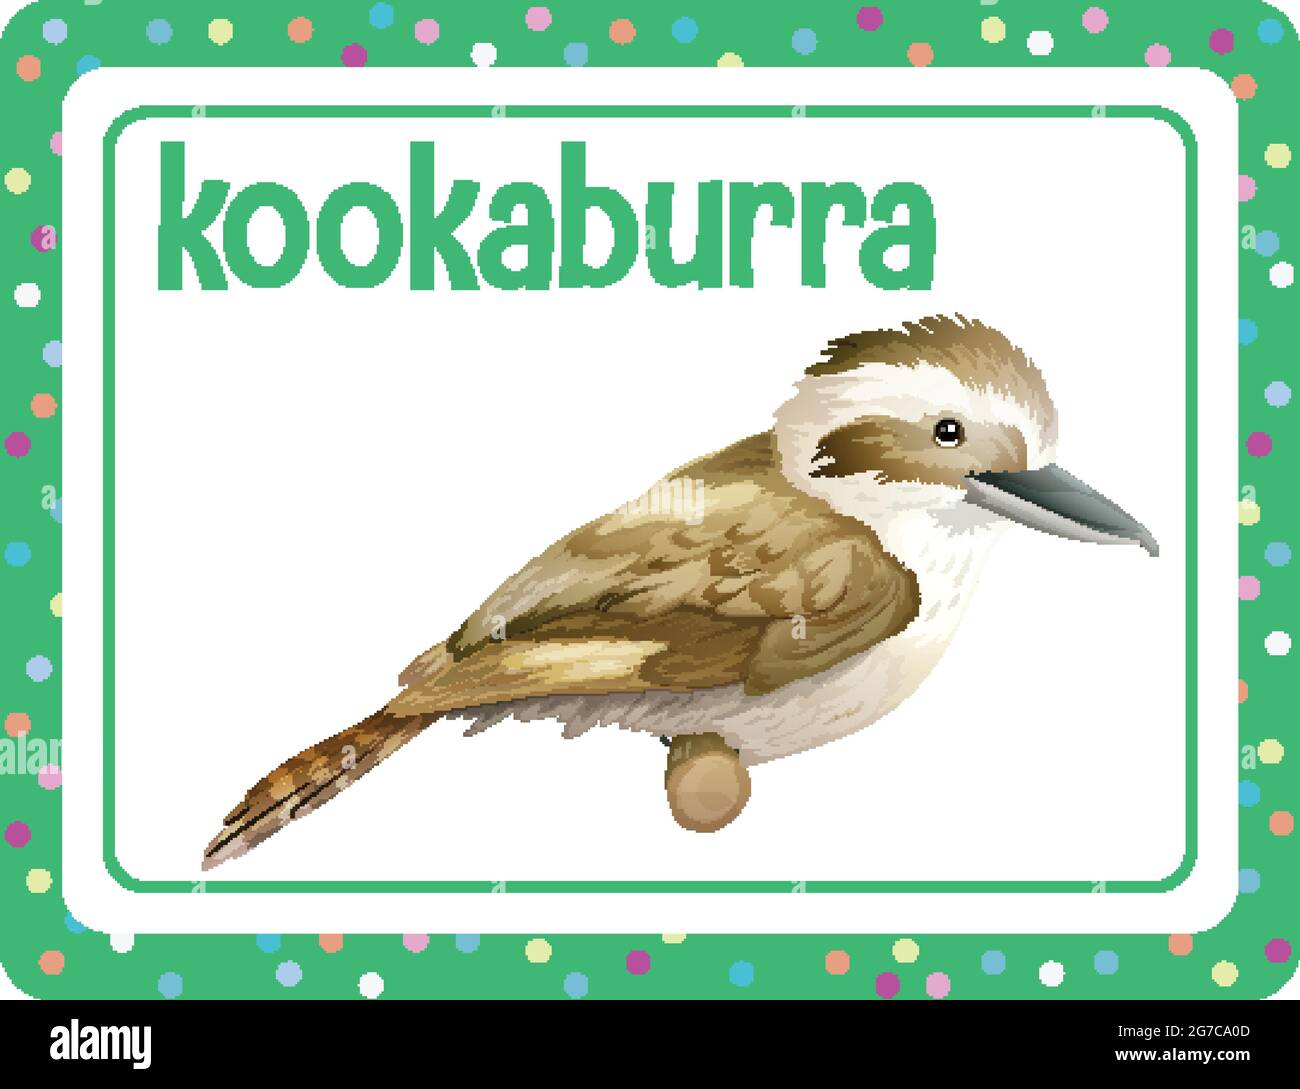 Vocabulary flashcard with word Kookaburra illustration Stock Vector